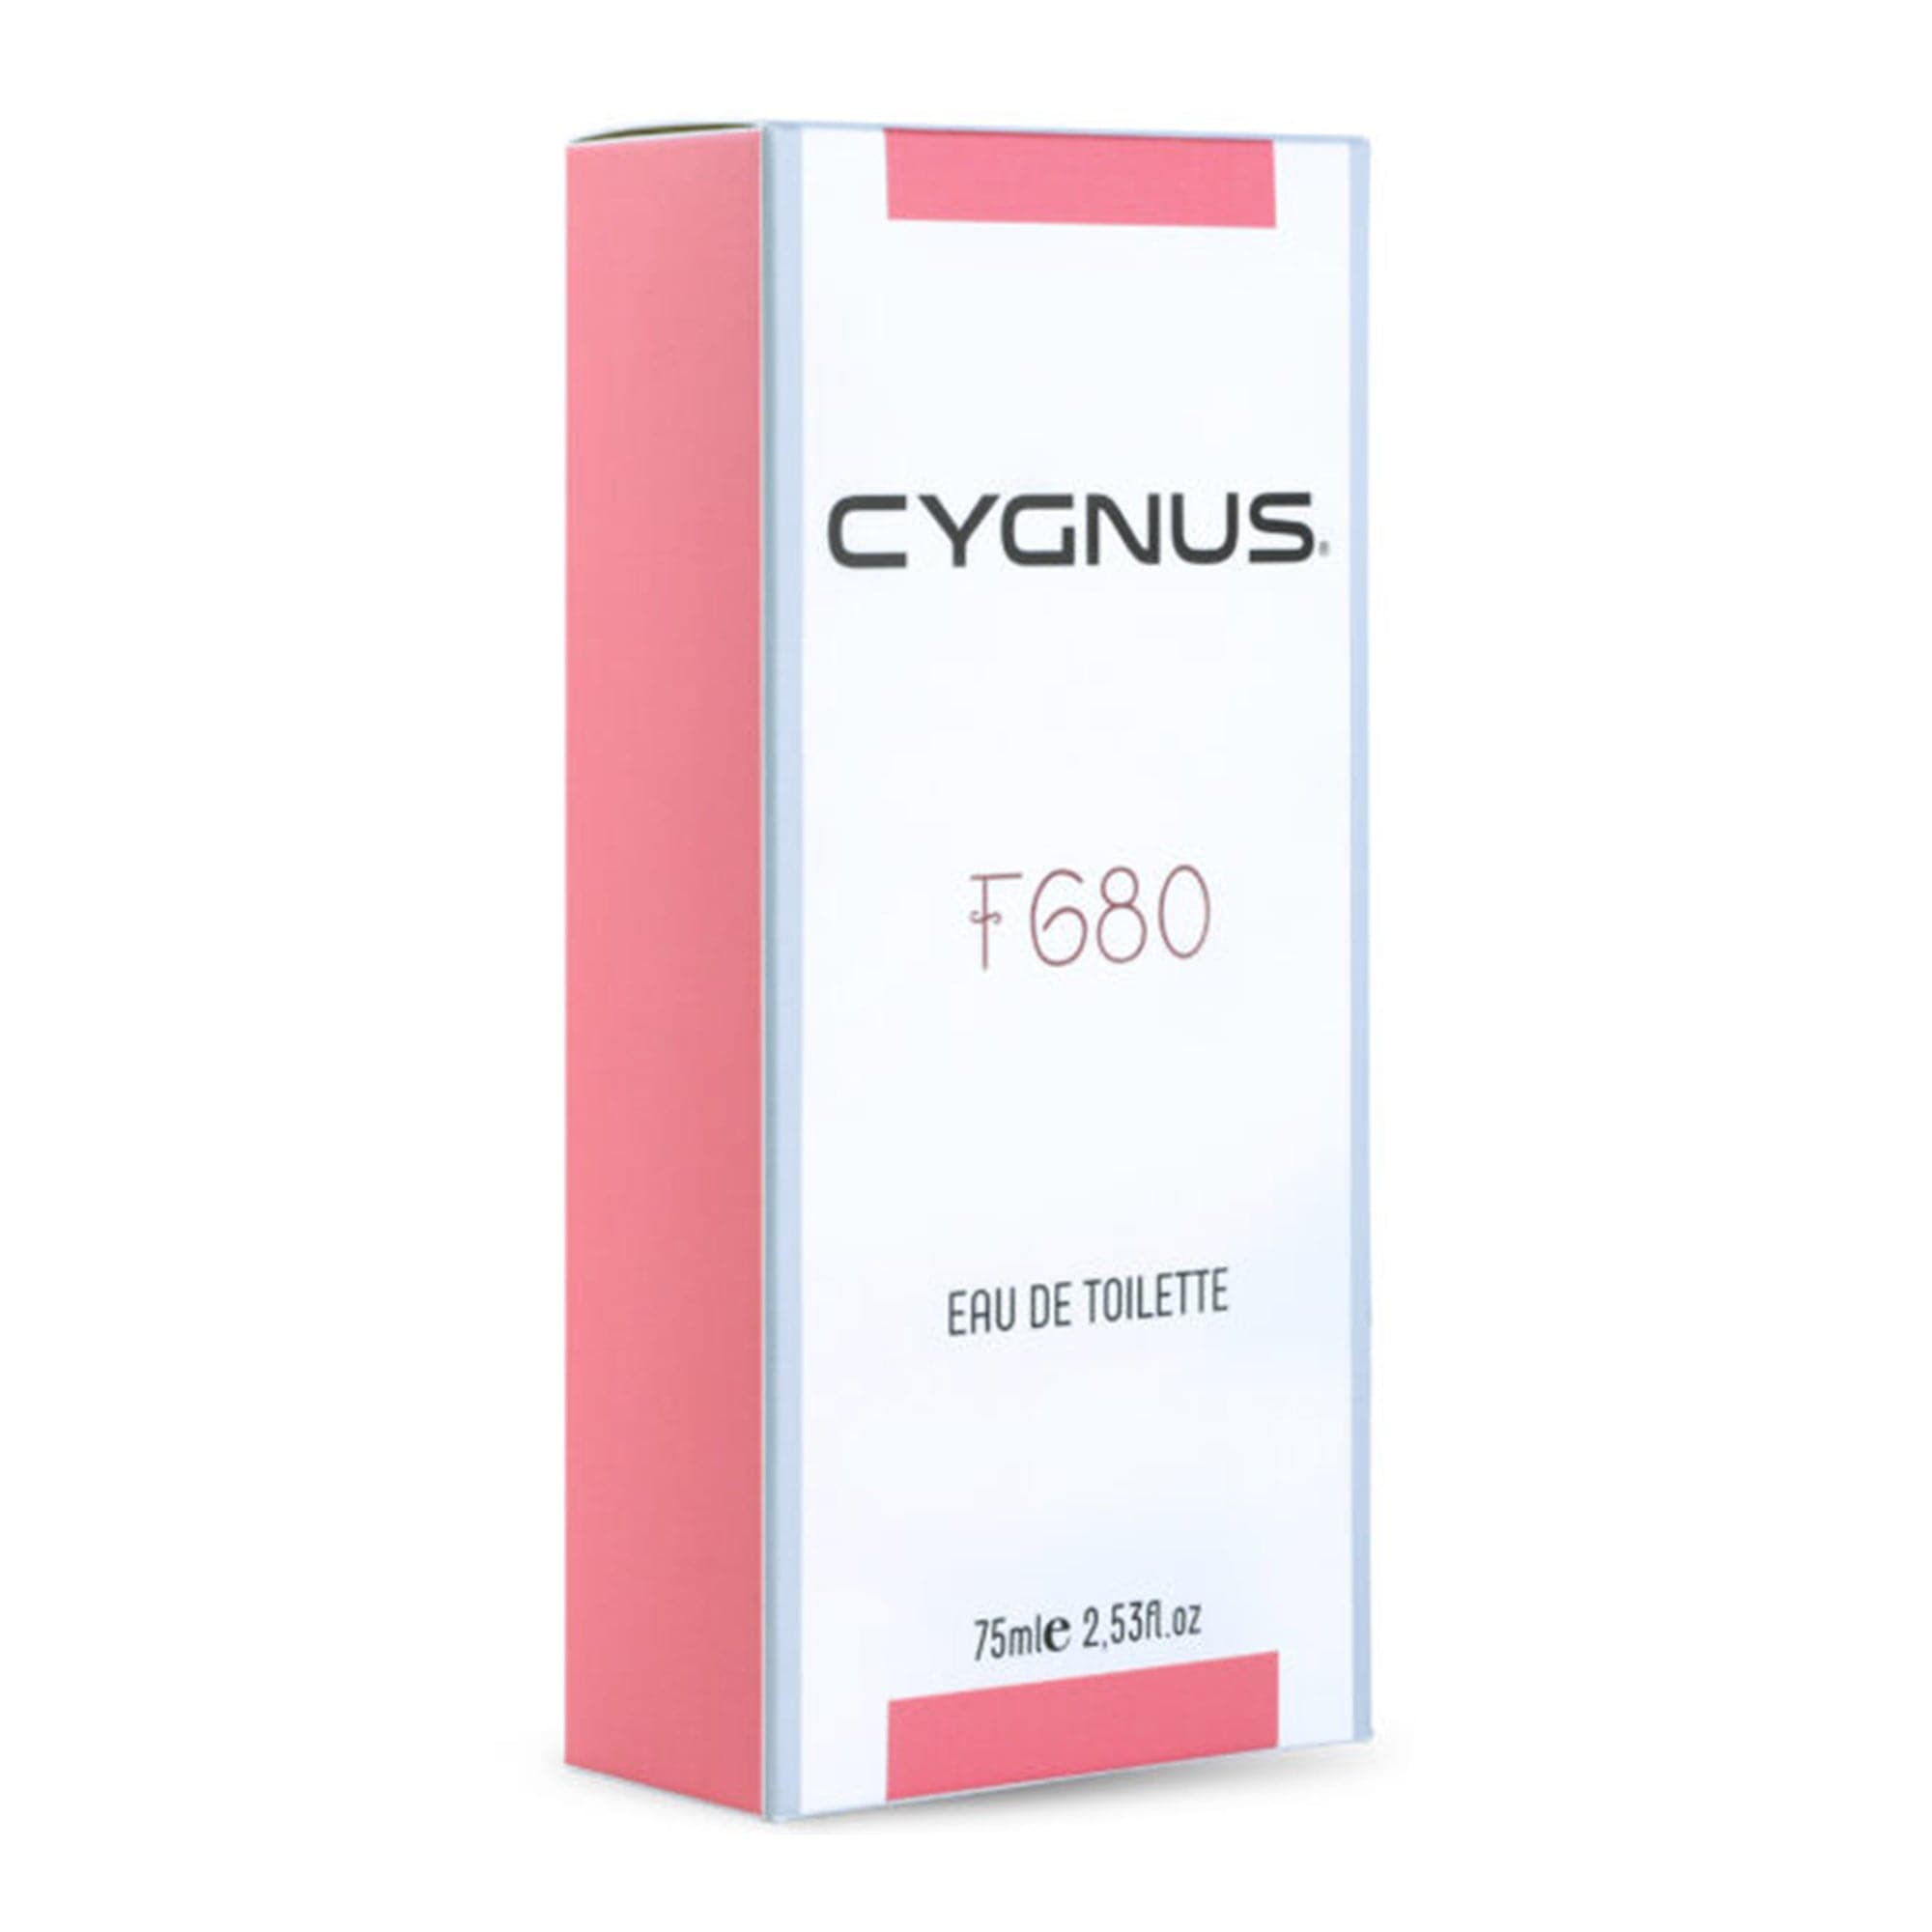 Totex - CYGNUS Eau De Toilette F680 75ml